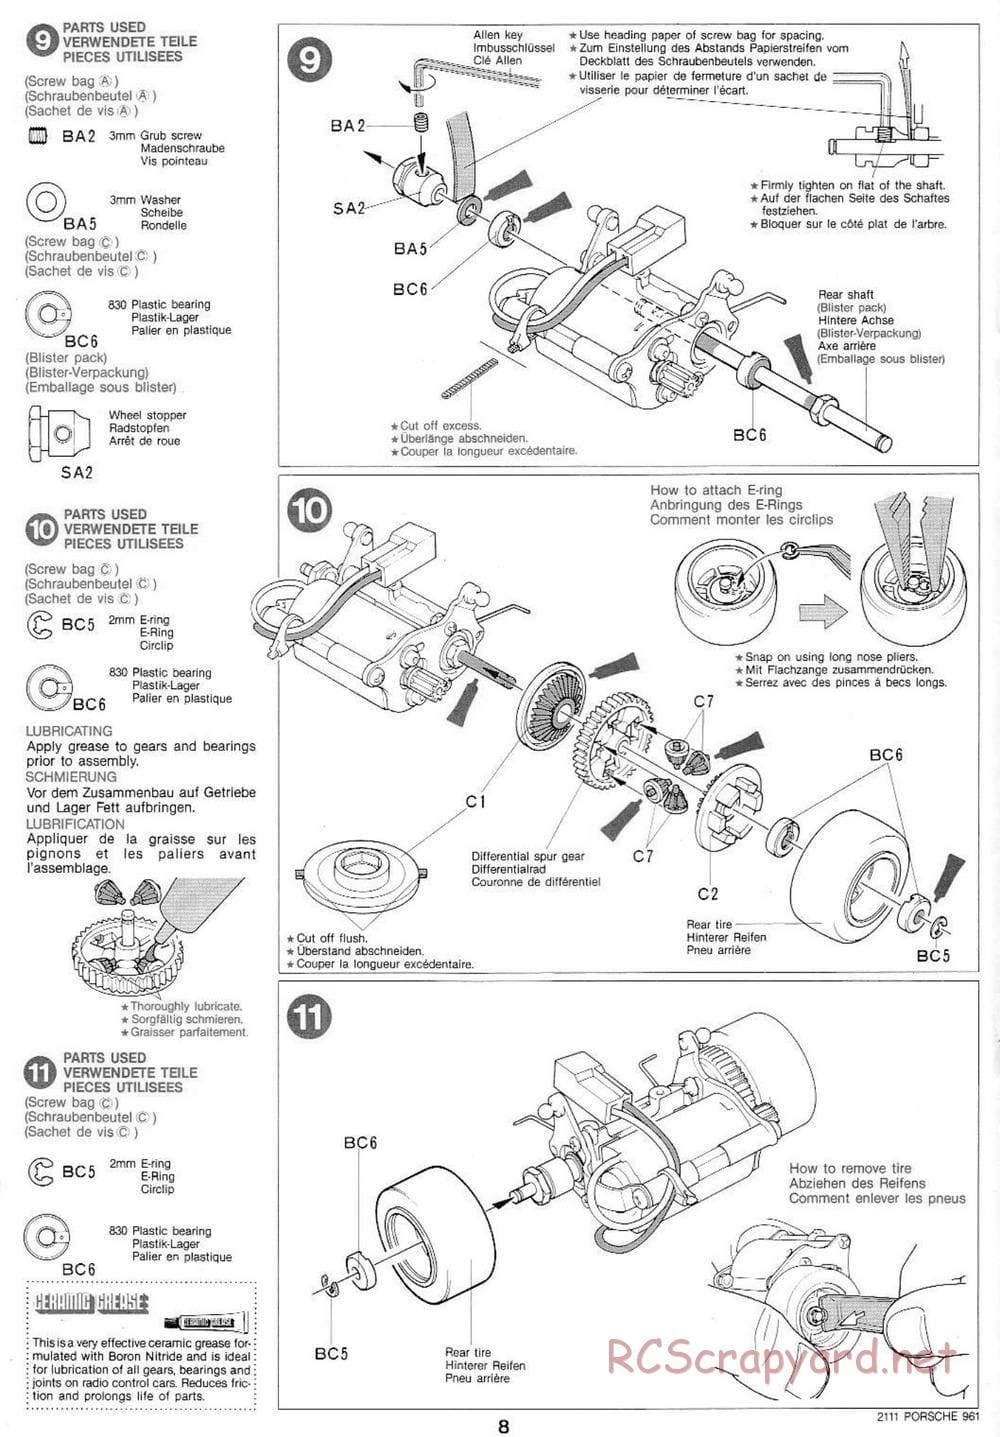 Tamiya - Tamtech - Porsche 961 Chassis - Manual - Page 8